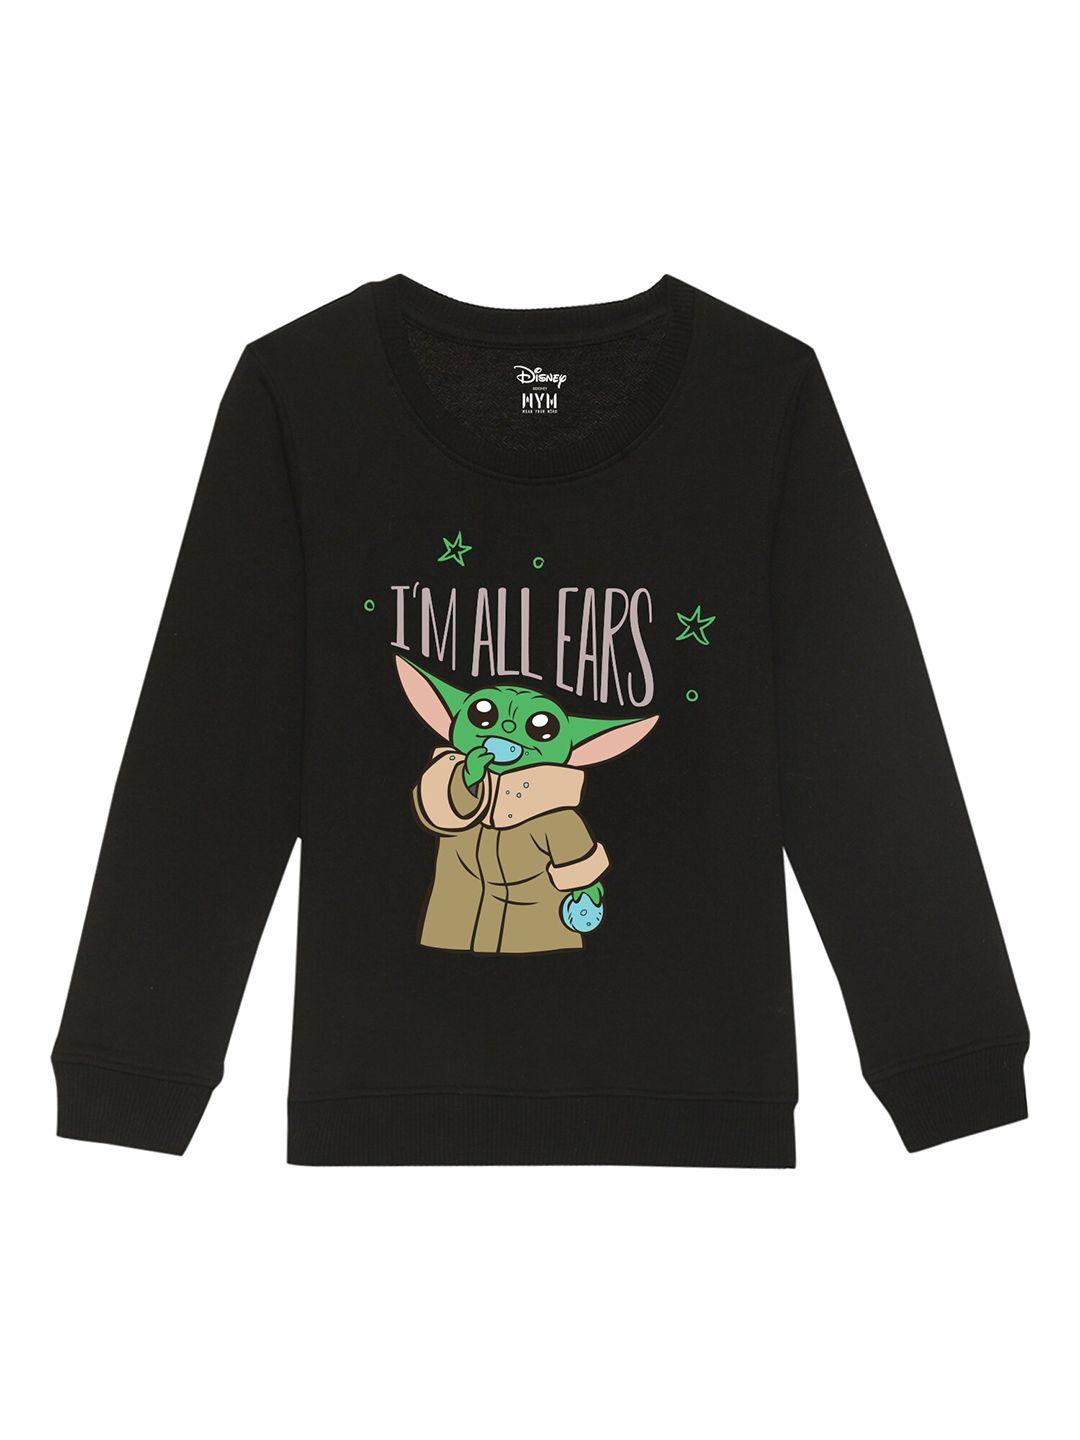 star-wars-by-wear-your-mind-kids-unisex-black-printed-sweatshirt